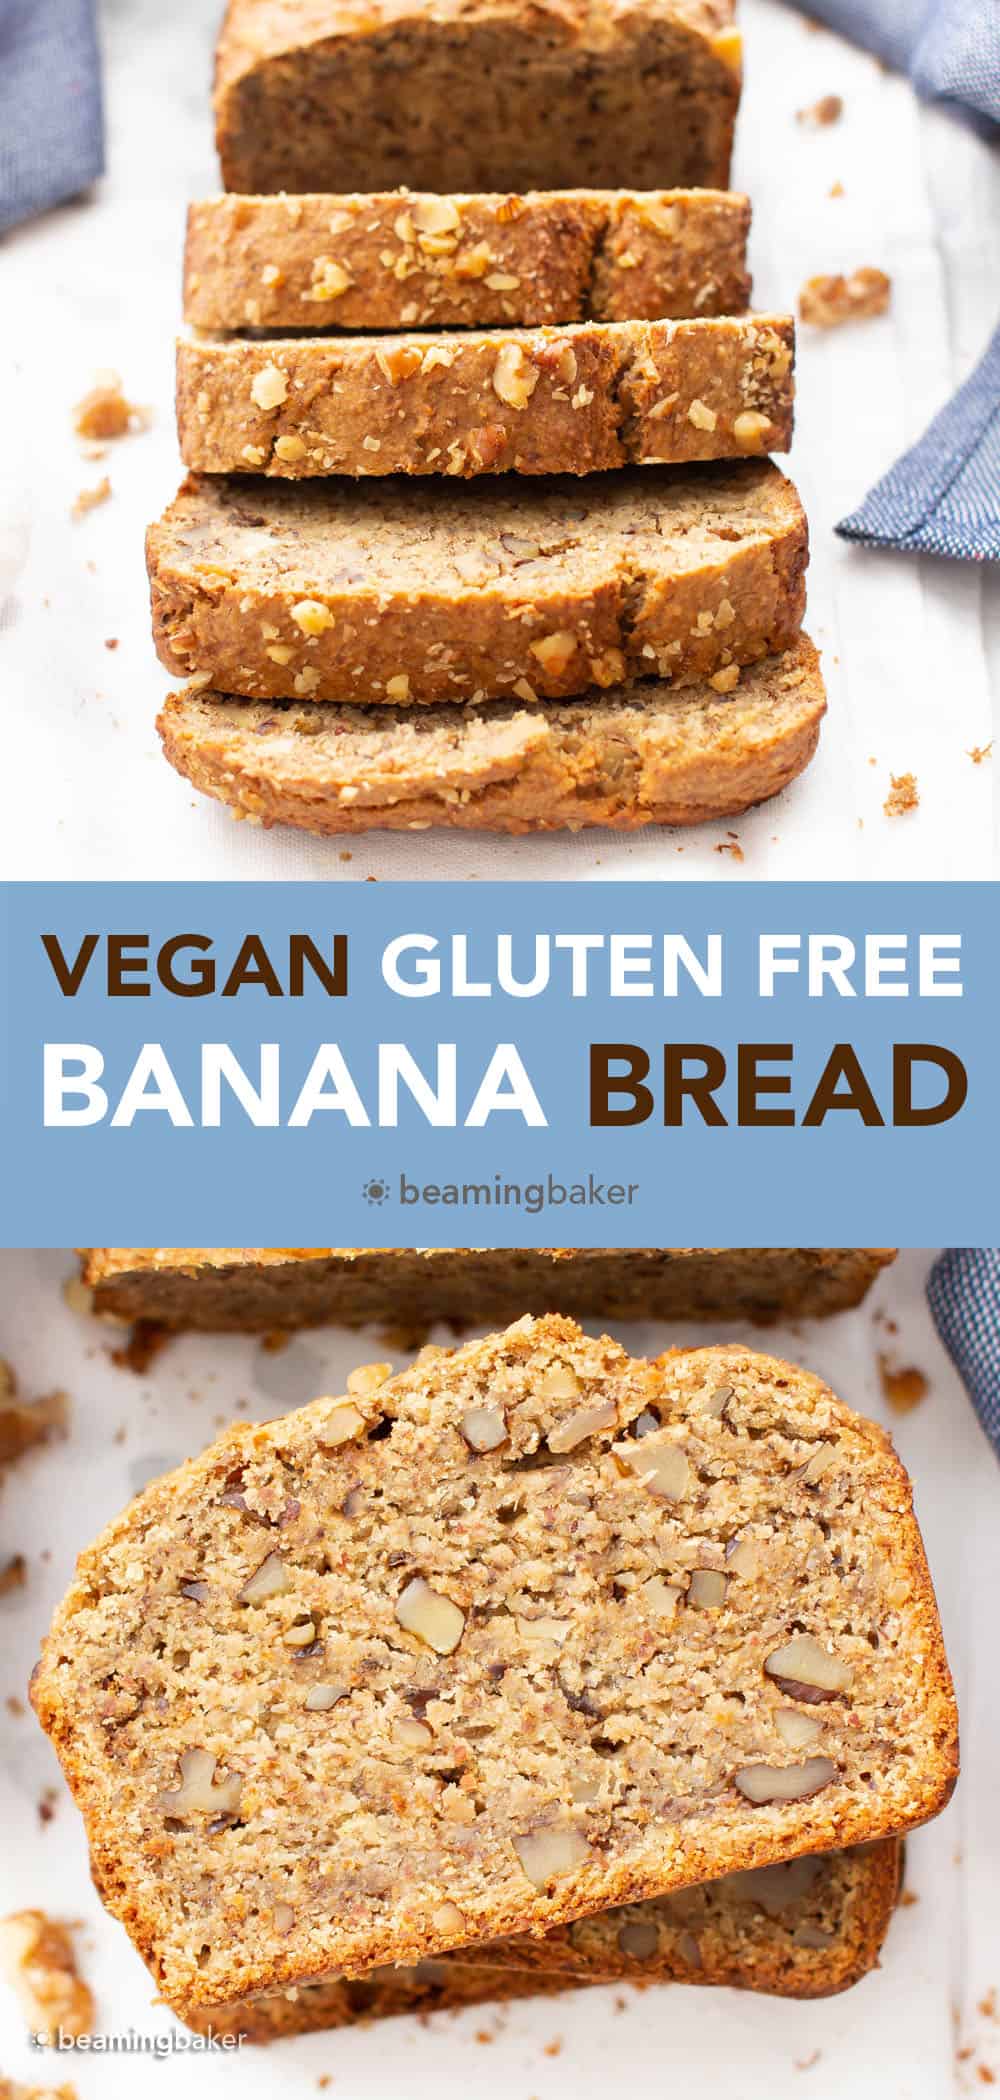 Vegan gluten free banana bread pin image